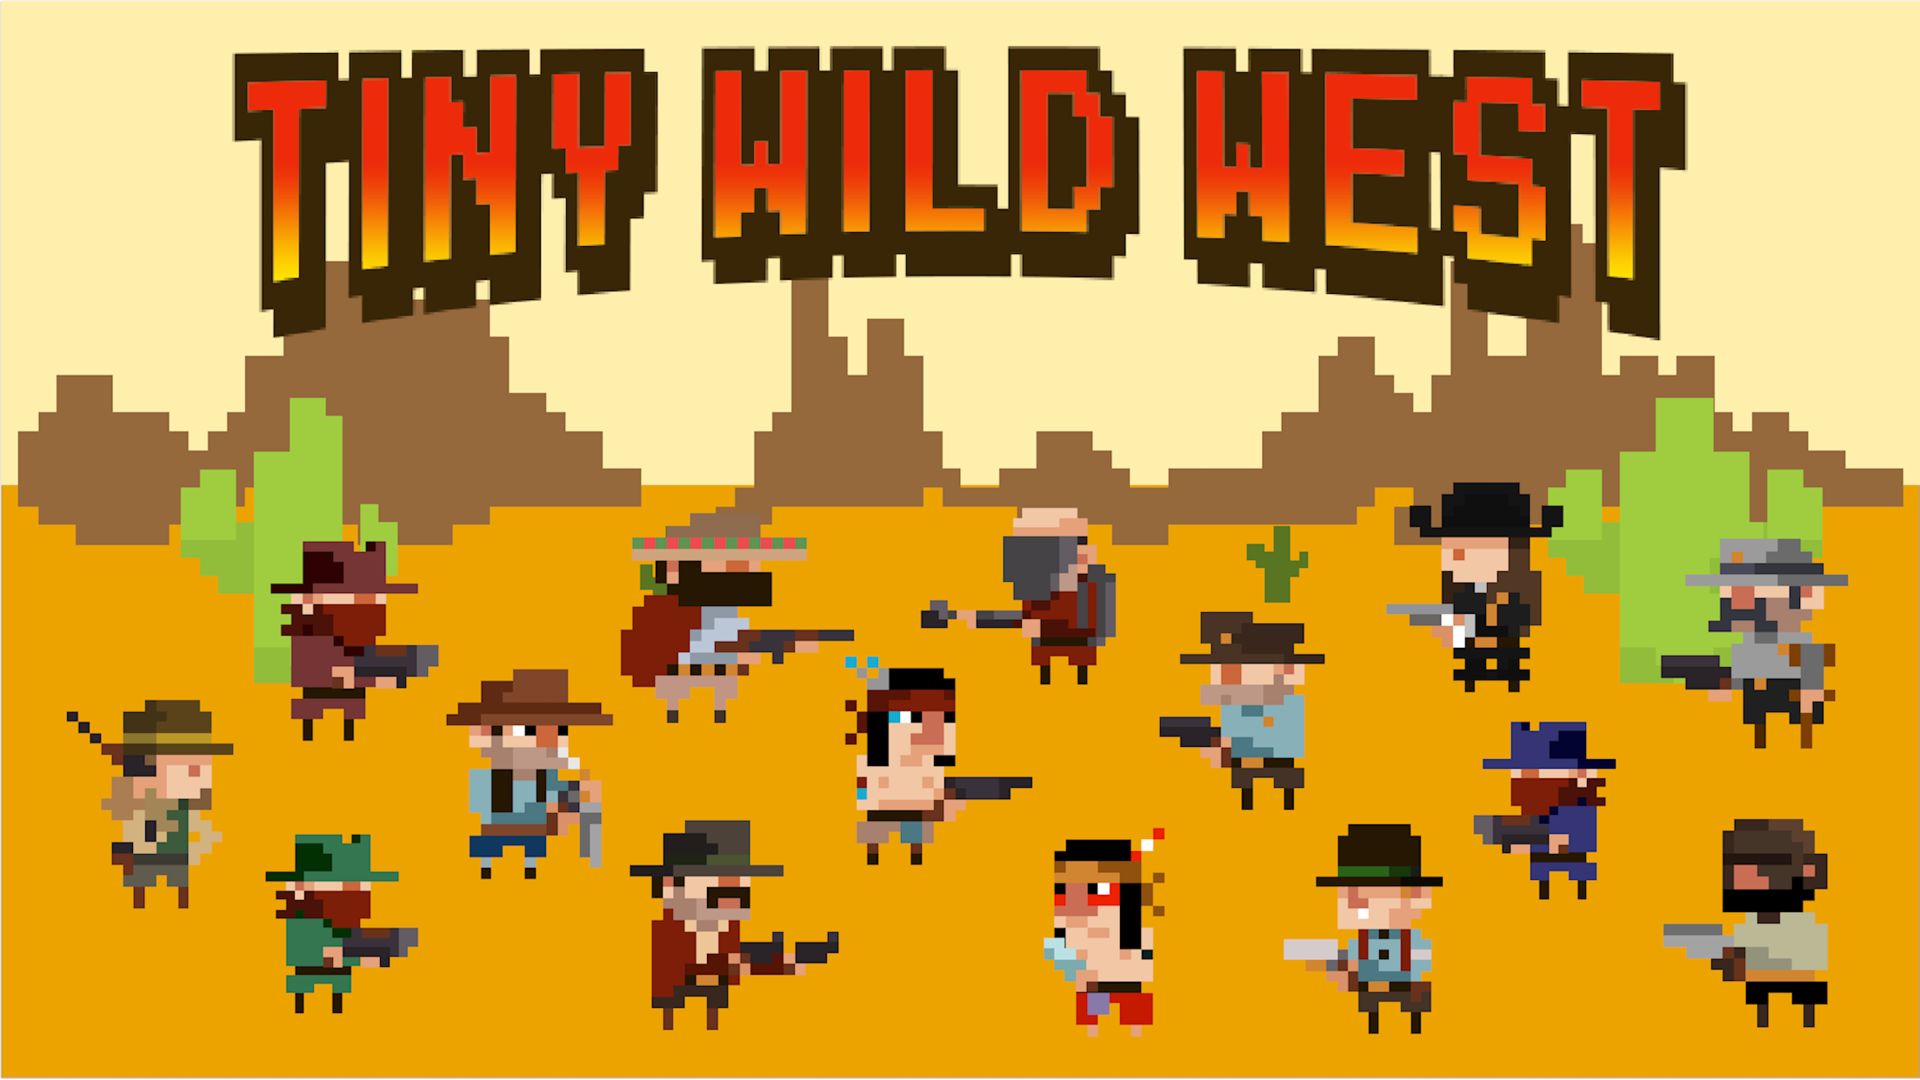 Screenshot of Tiny Wild West - Endless 8-bit pixel bullet hell